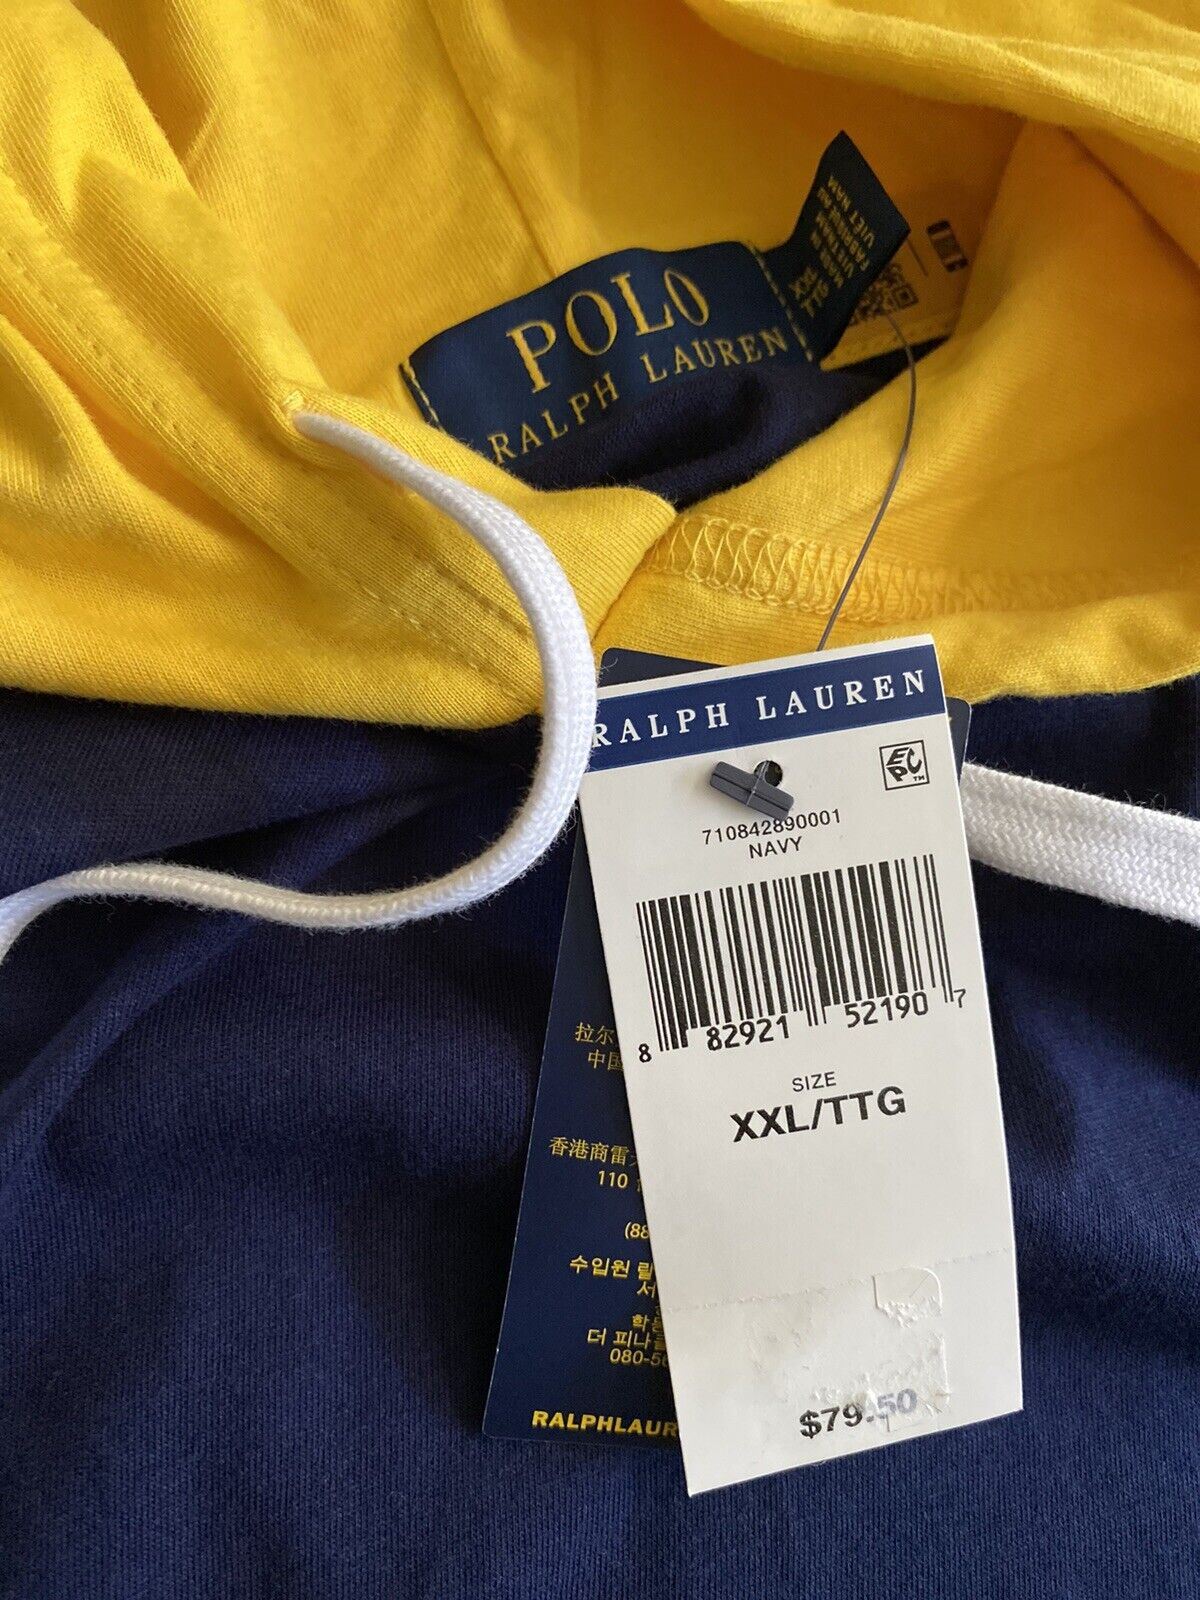 Neu mit Etikett: Polo Ralph Lauren Langarm-Sweatshirt mit Signature-Logo, Marineblau, 2XL 